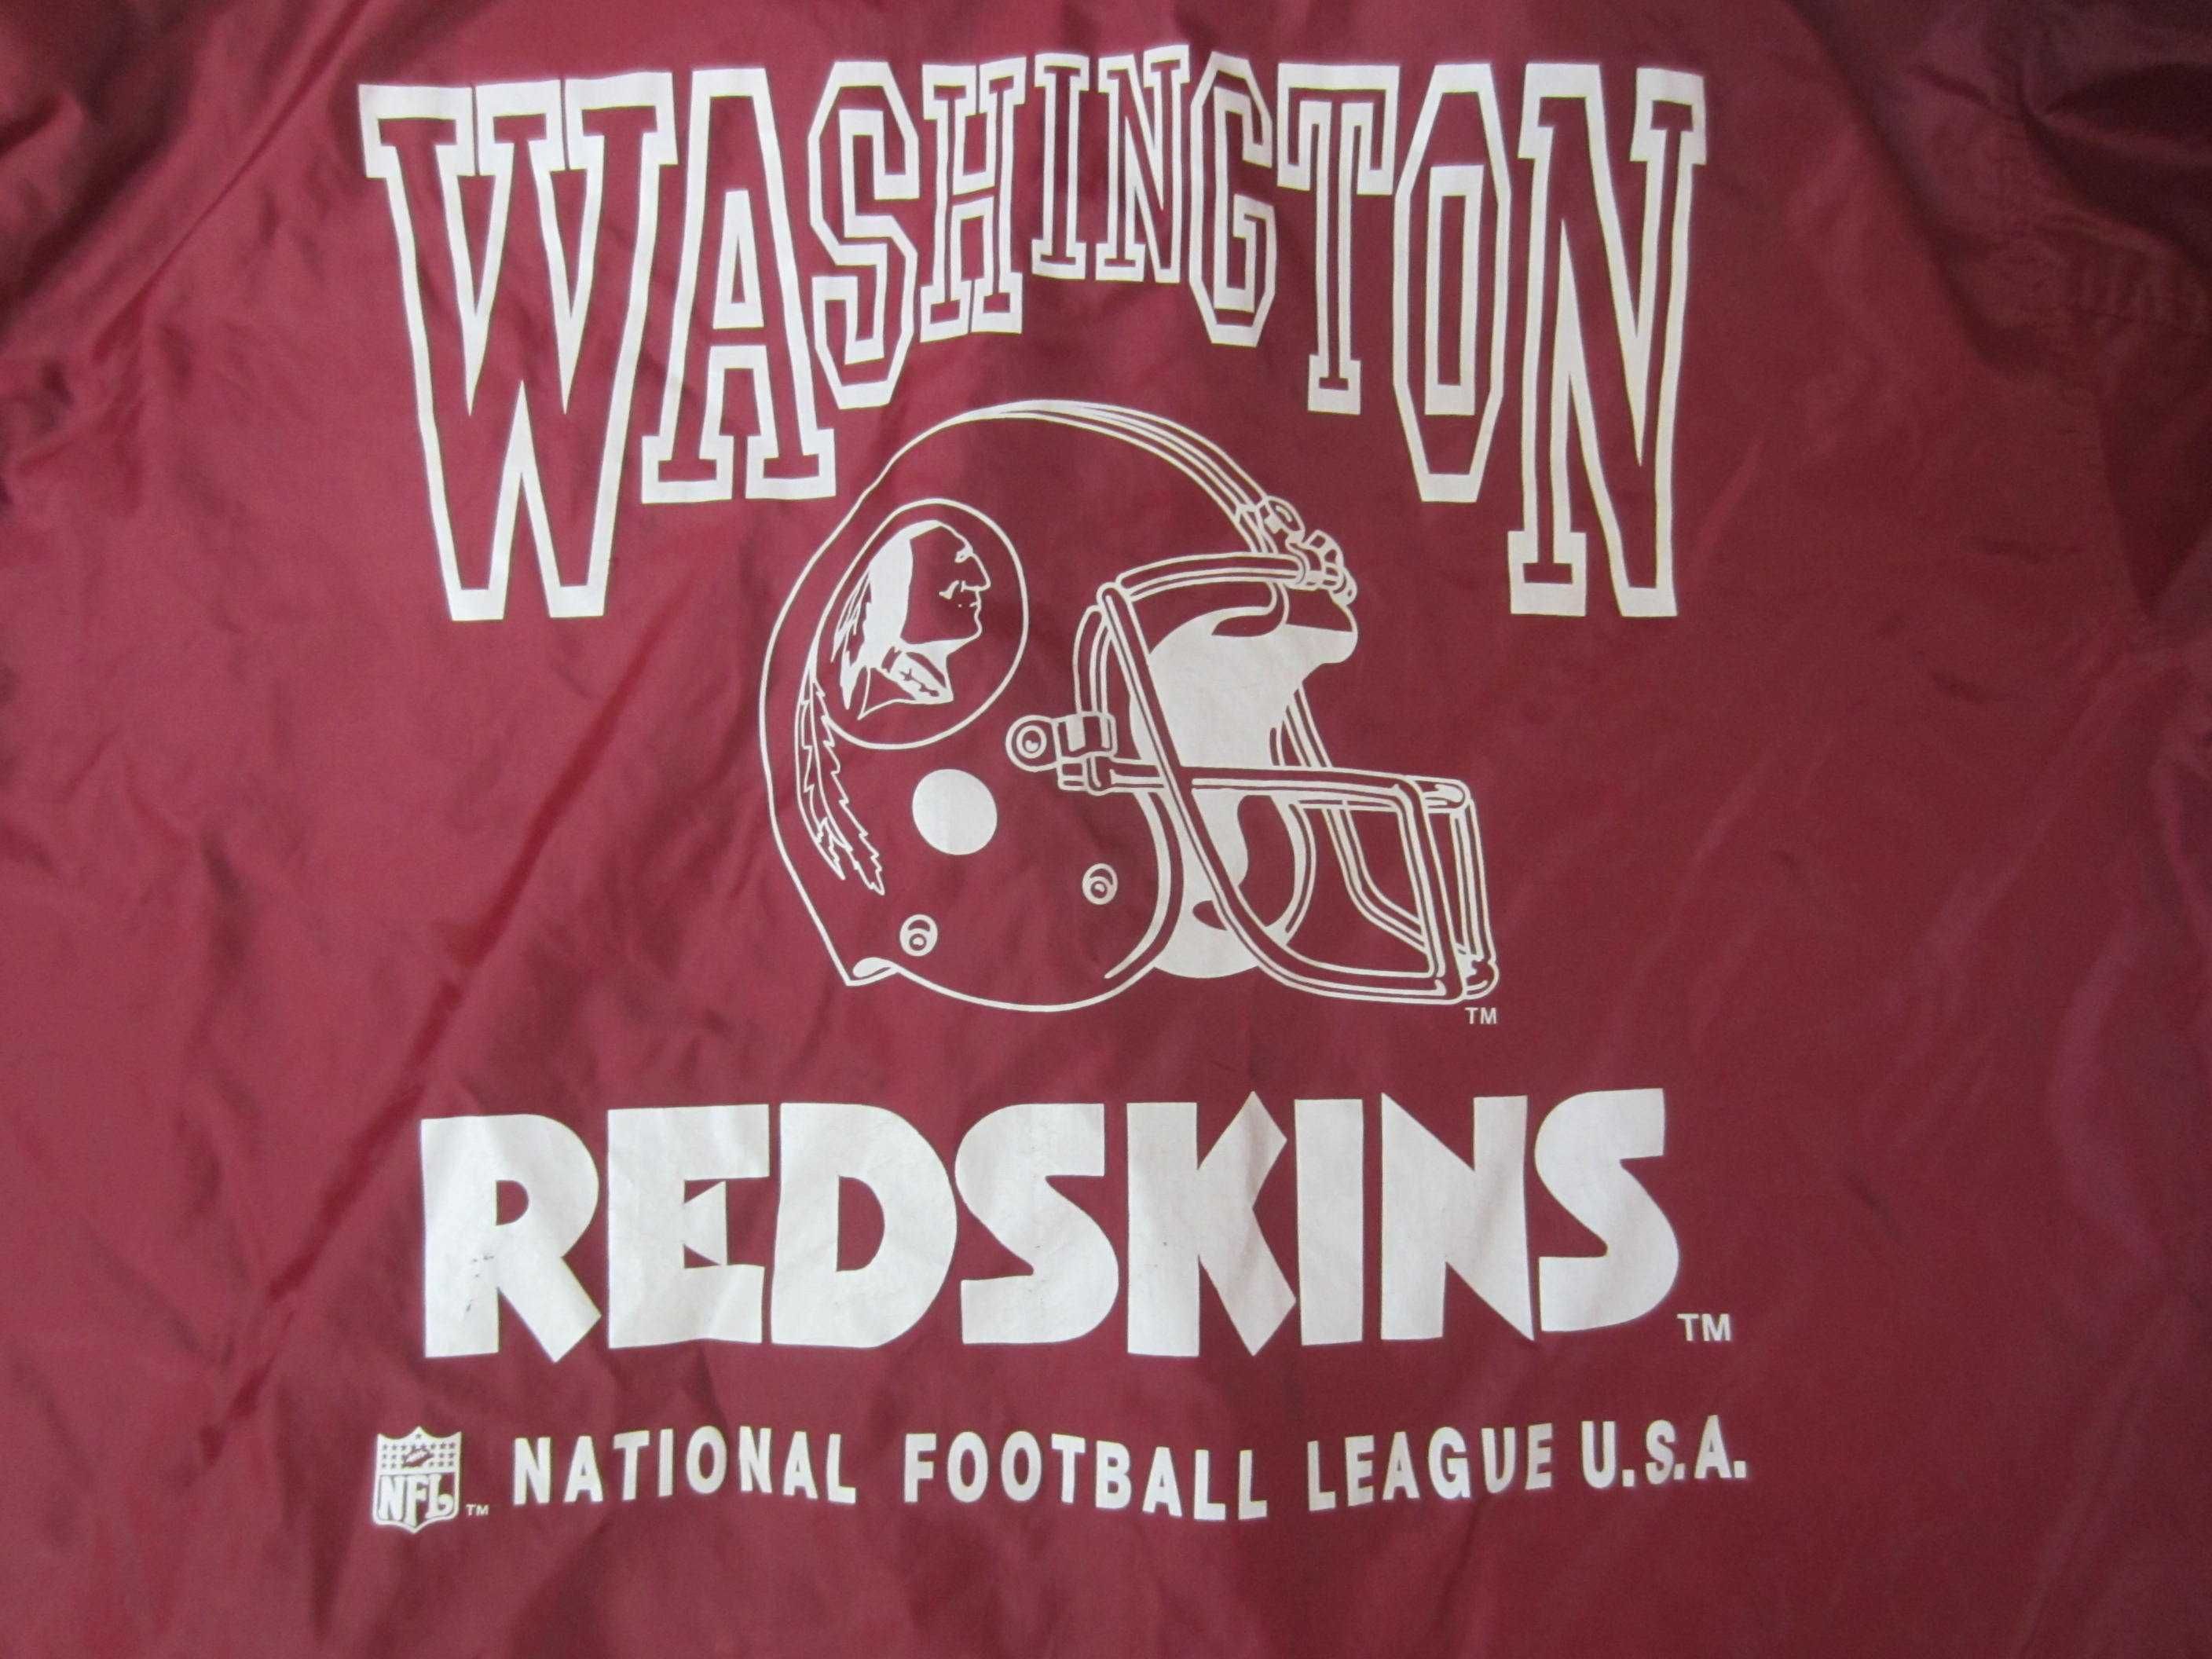 Geaca NFL Washington Redskins,masura XXL, gluga